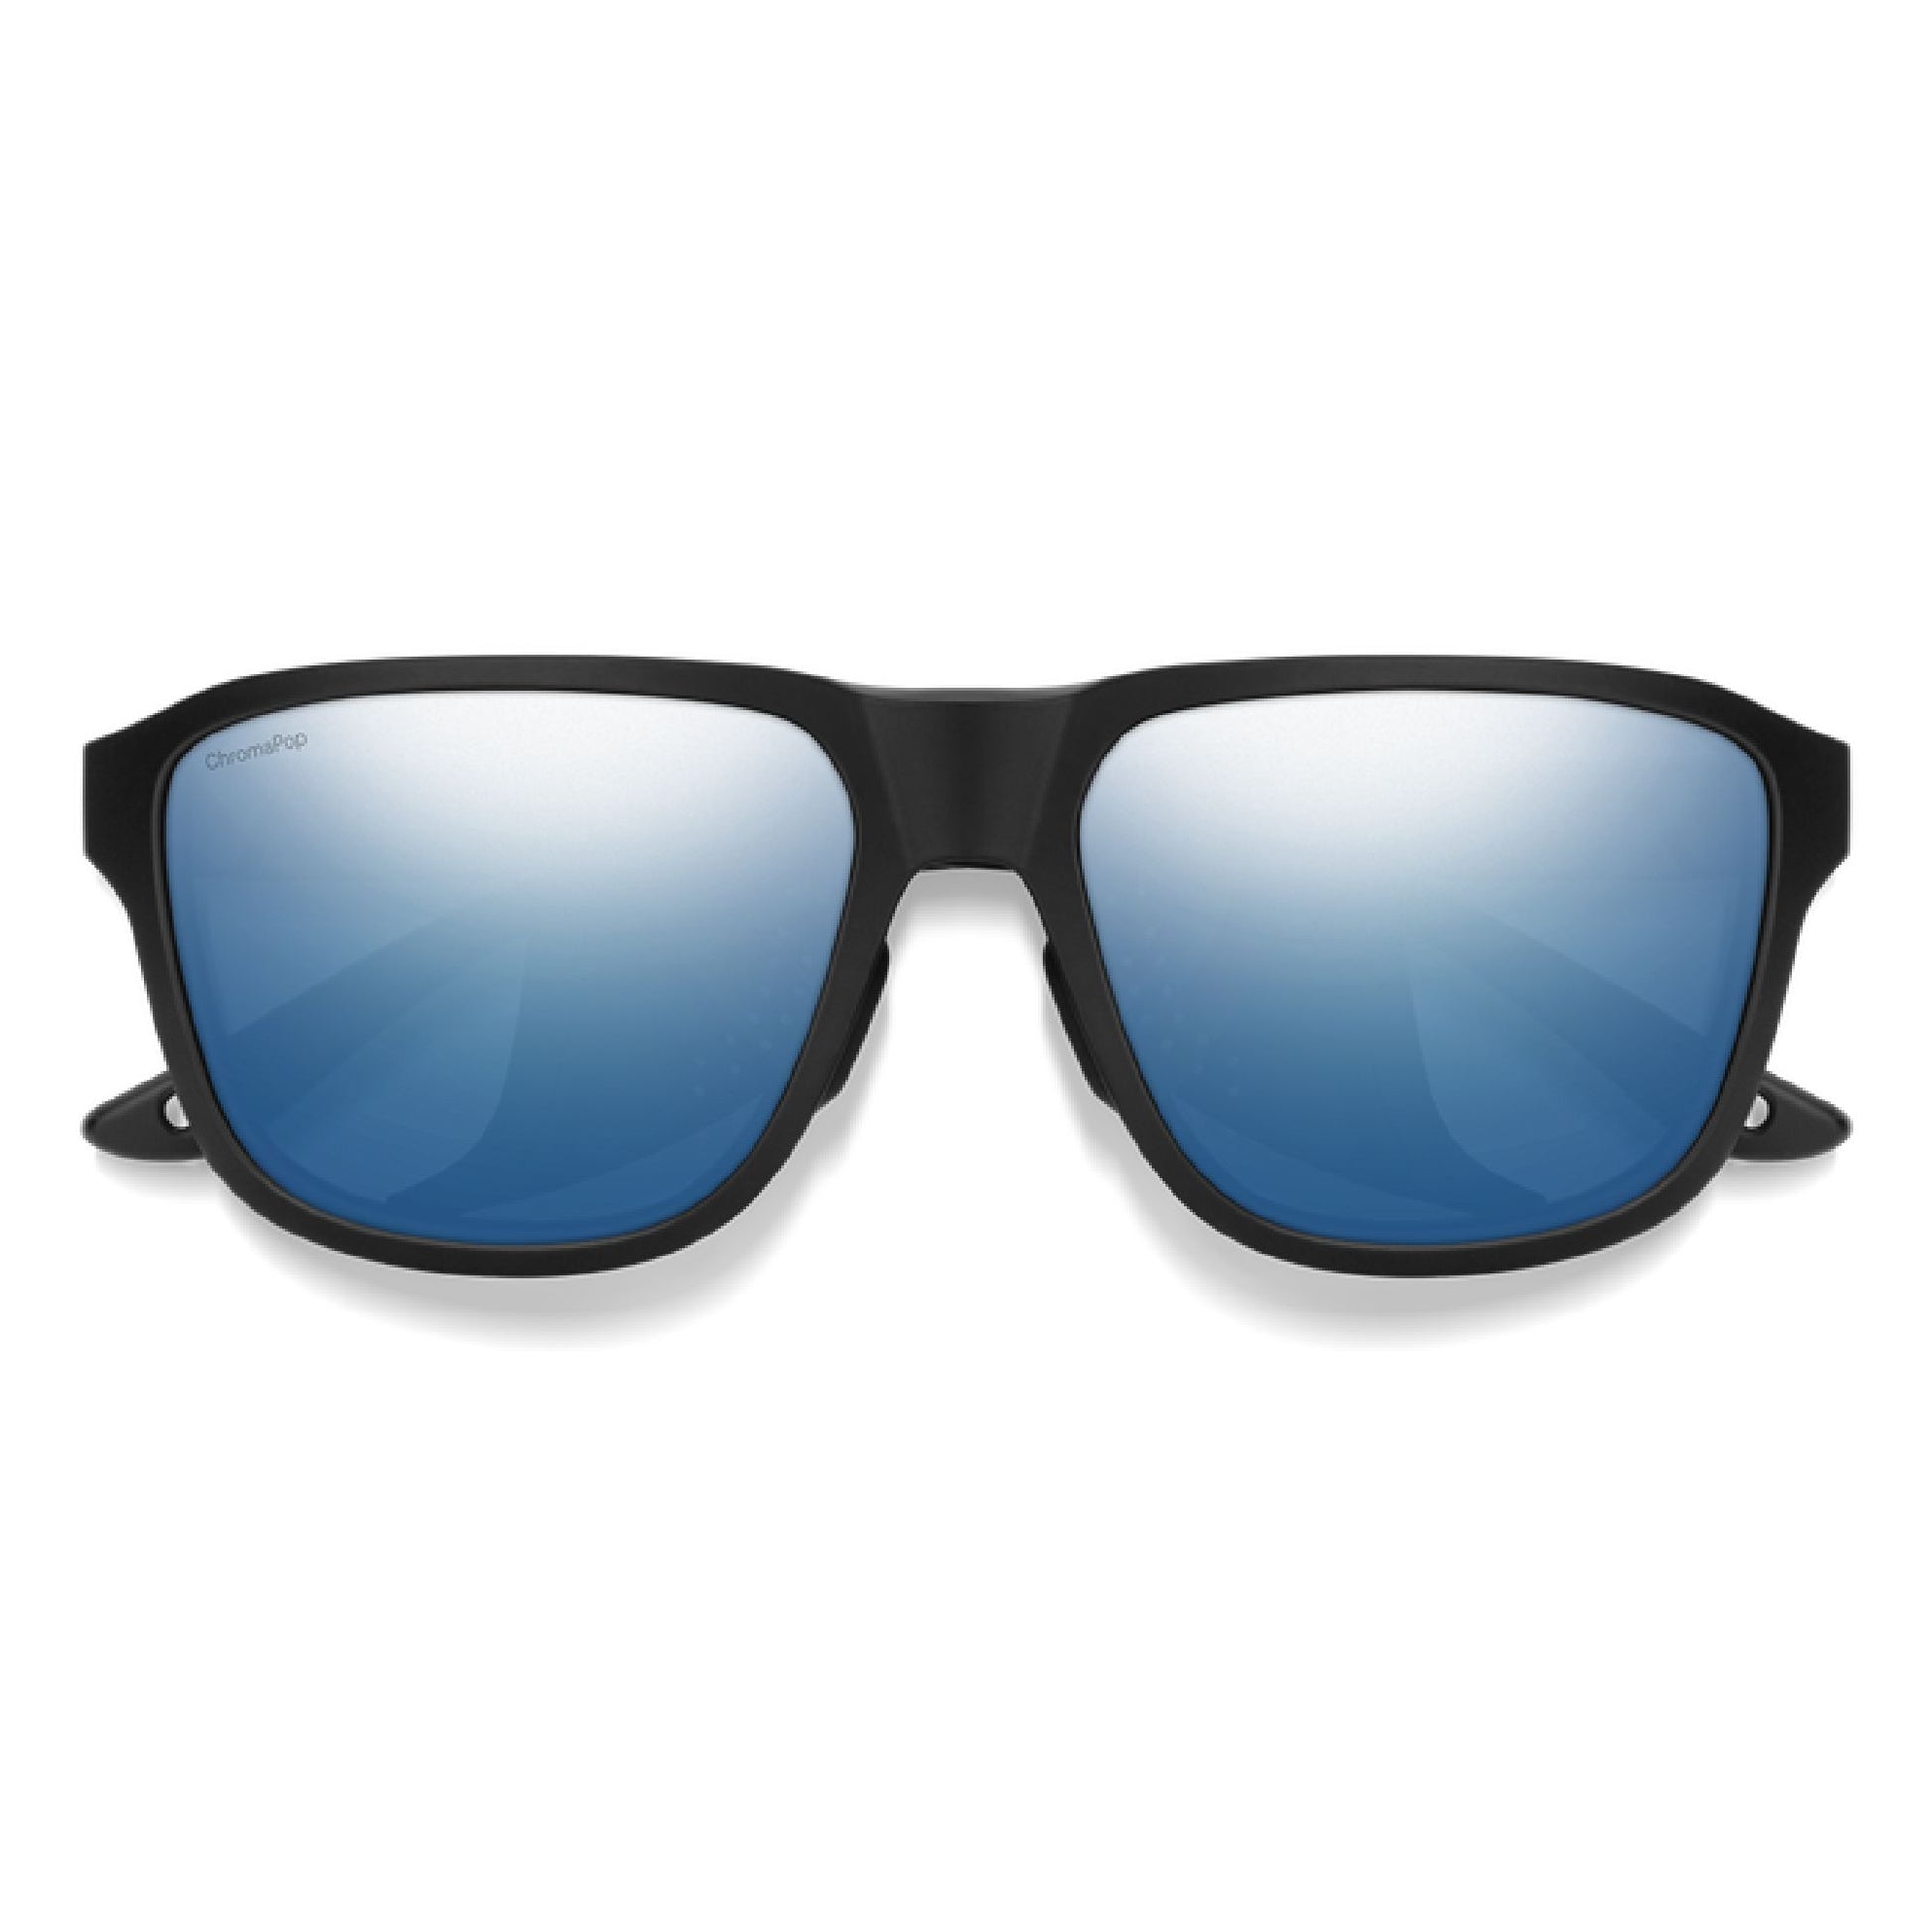 Smith Embark Sunglasses Matte Black ChromaPop Polarized Blue Mirror Sunglasses